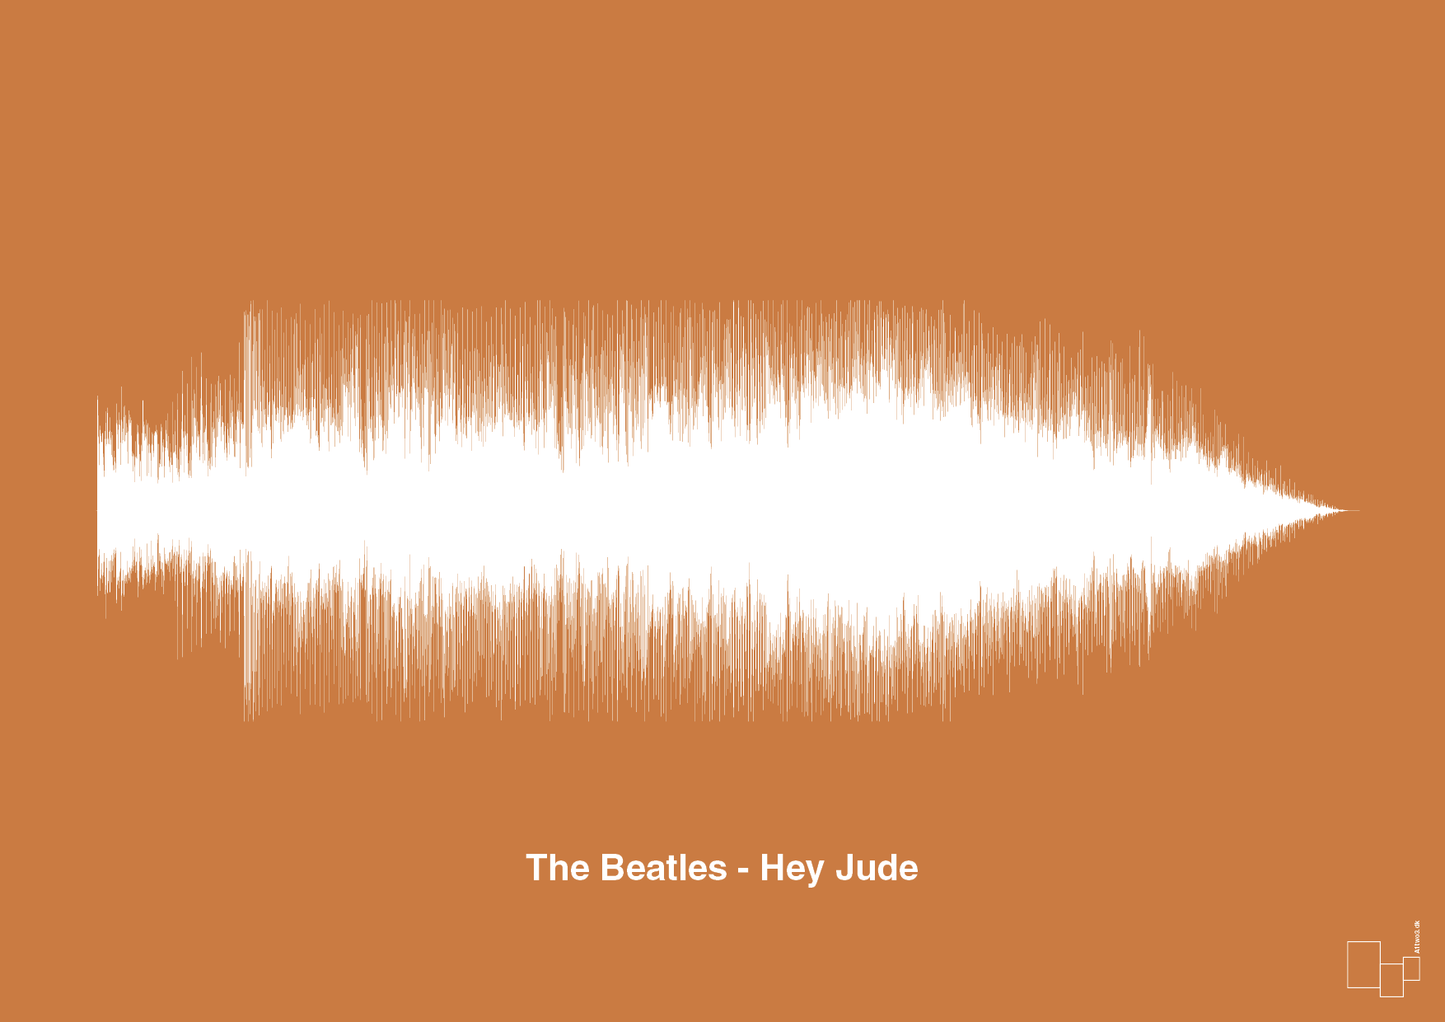 the beatles - hey jude - Plakat med Musik i Rumba Orange